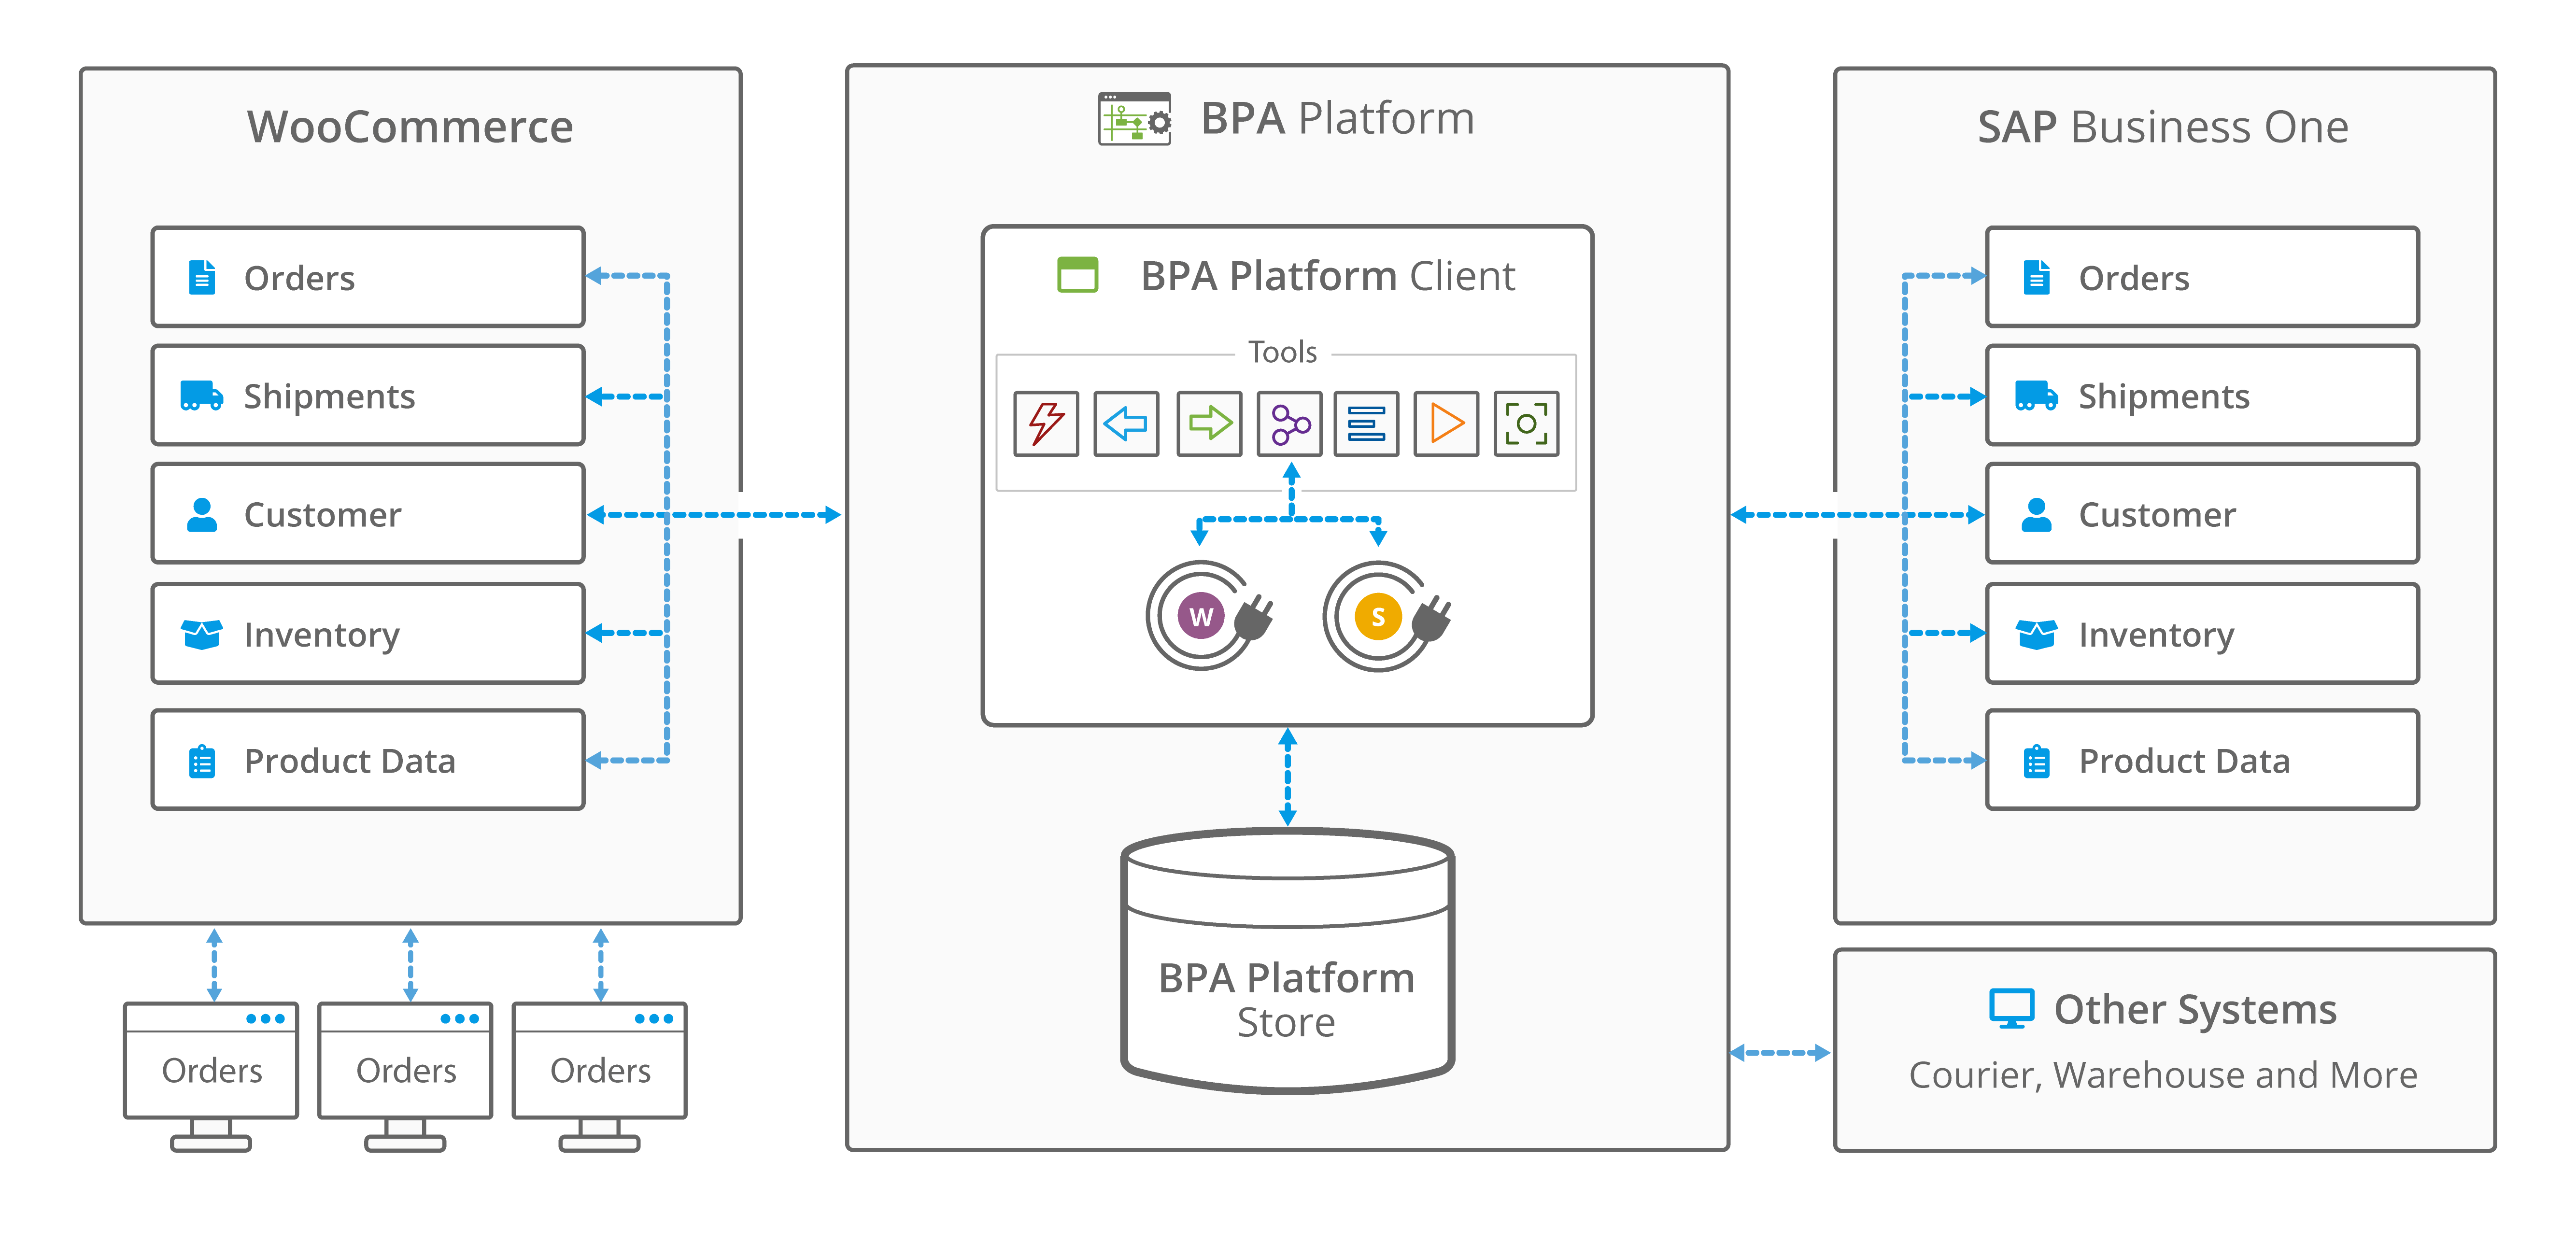 SAP Business One WooCommerce Integration architecture - BPA Platform